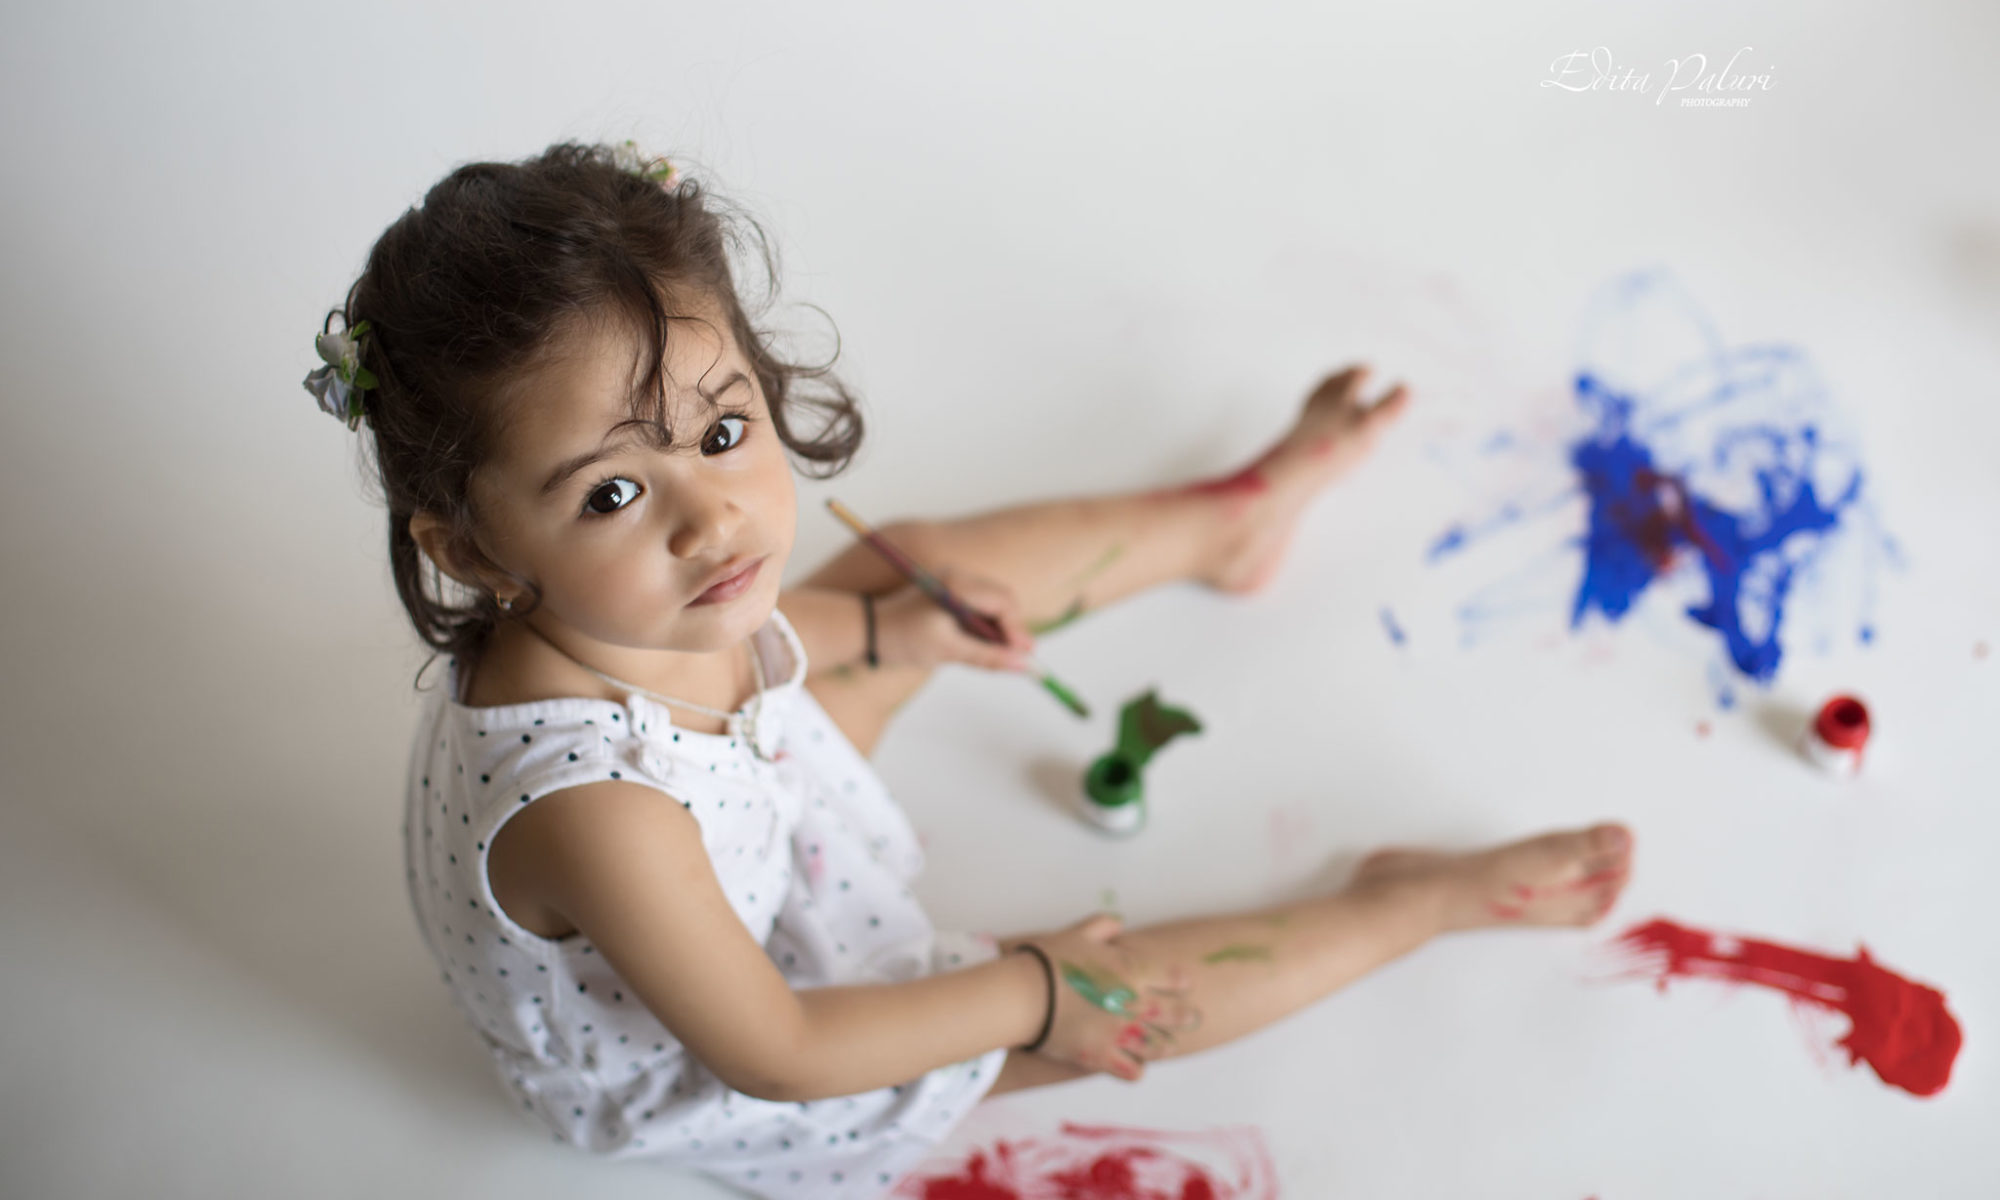 Kids love to do paint smashing